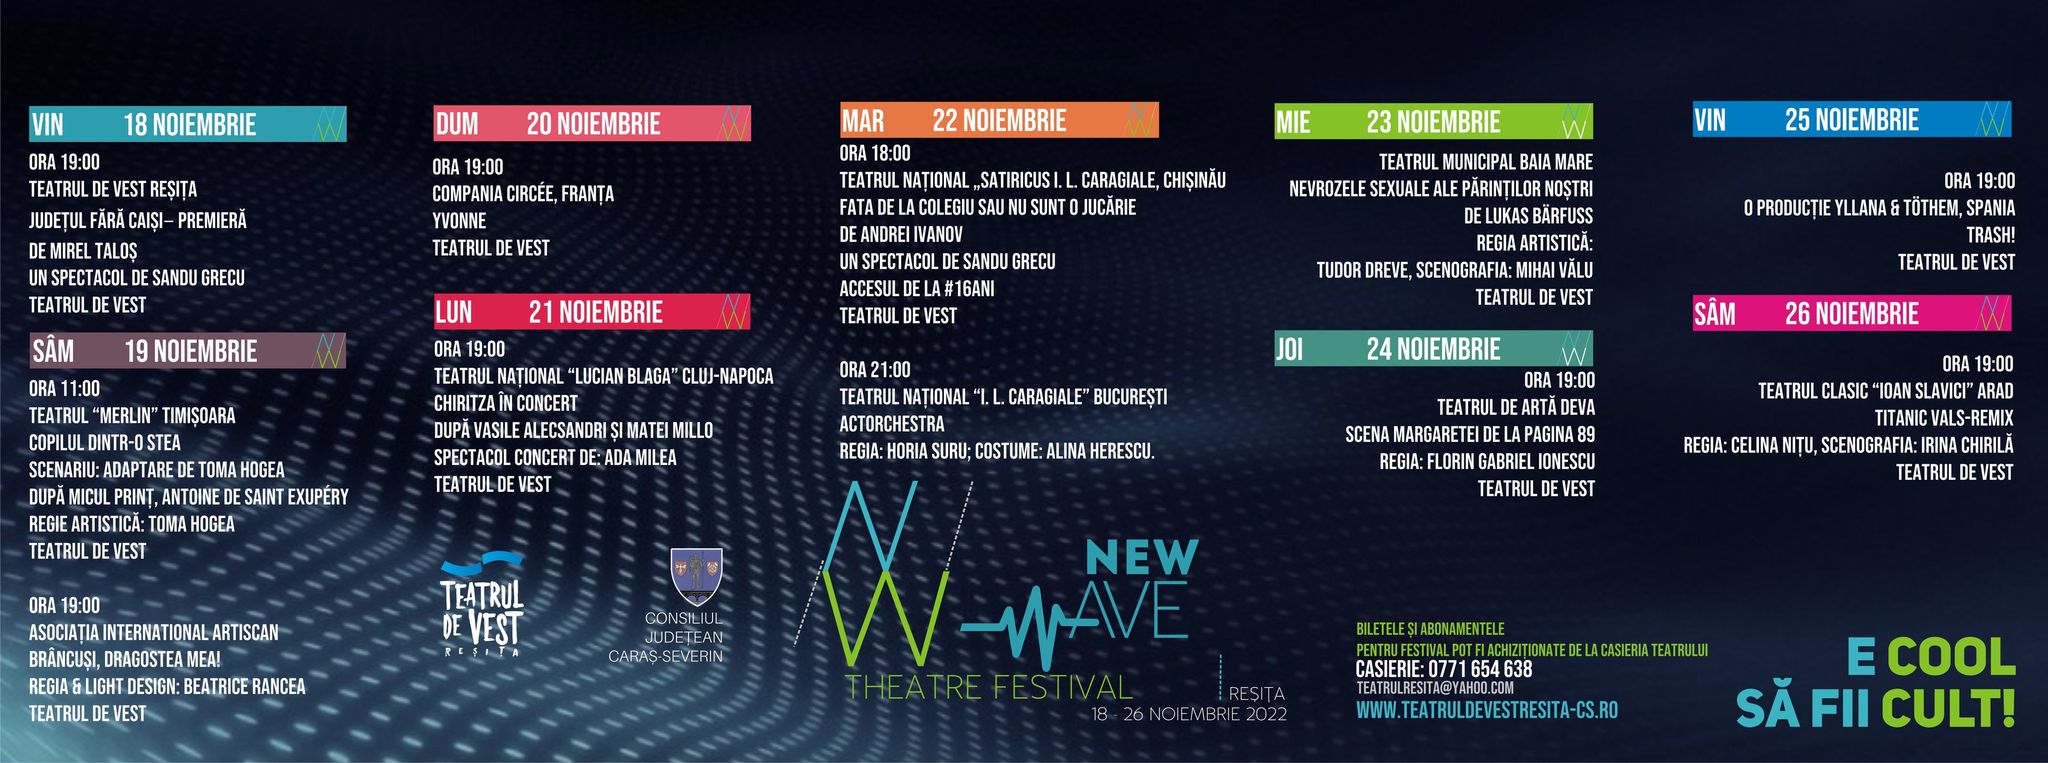 program festival teatru new wave